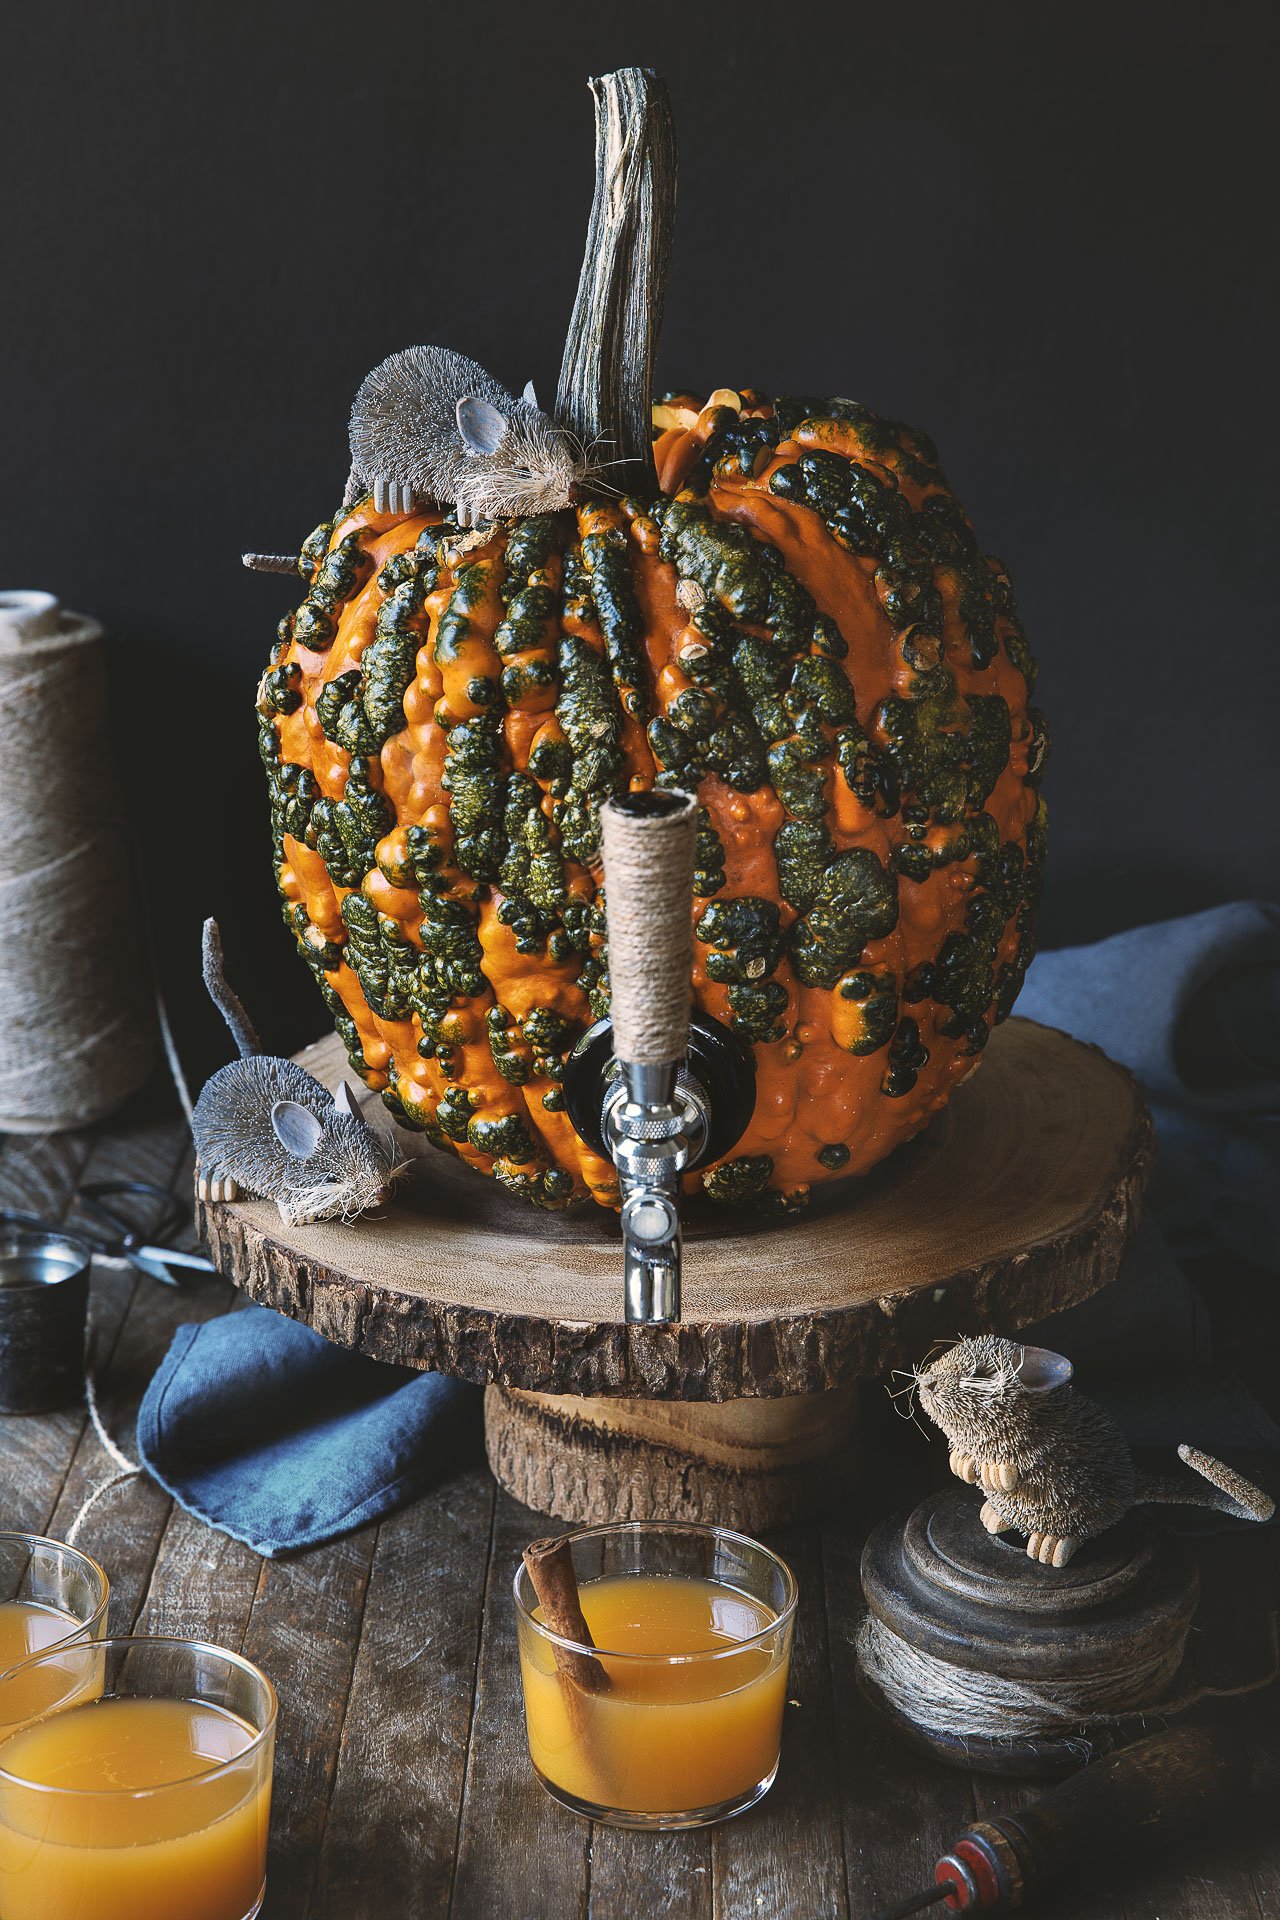 DIY Pumpkin Keg for your next Halloween party!